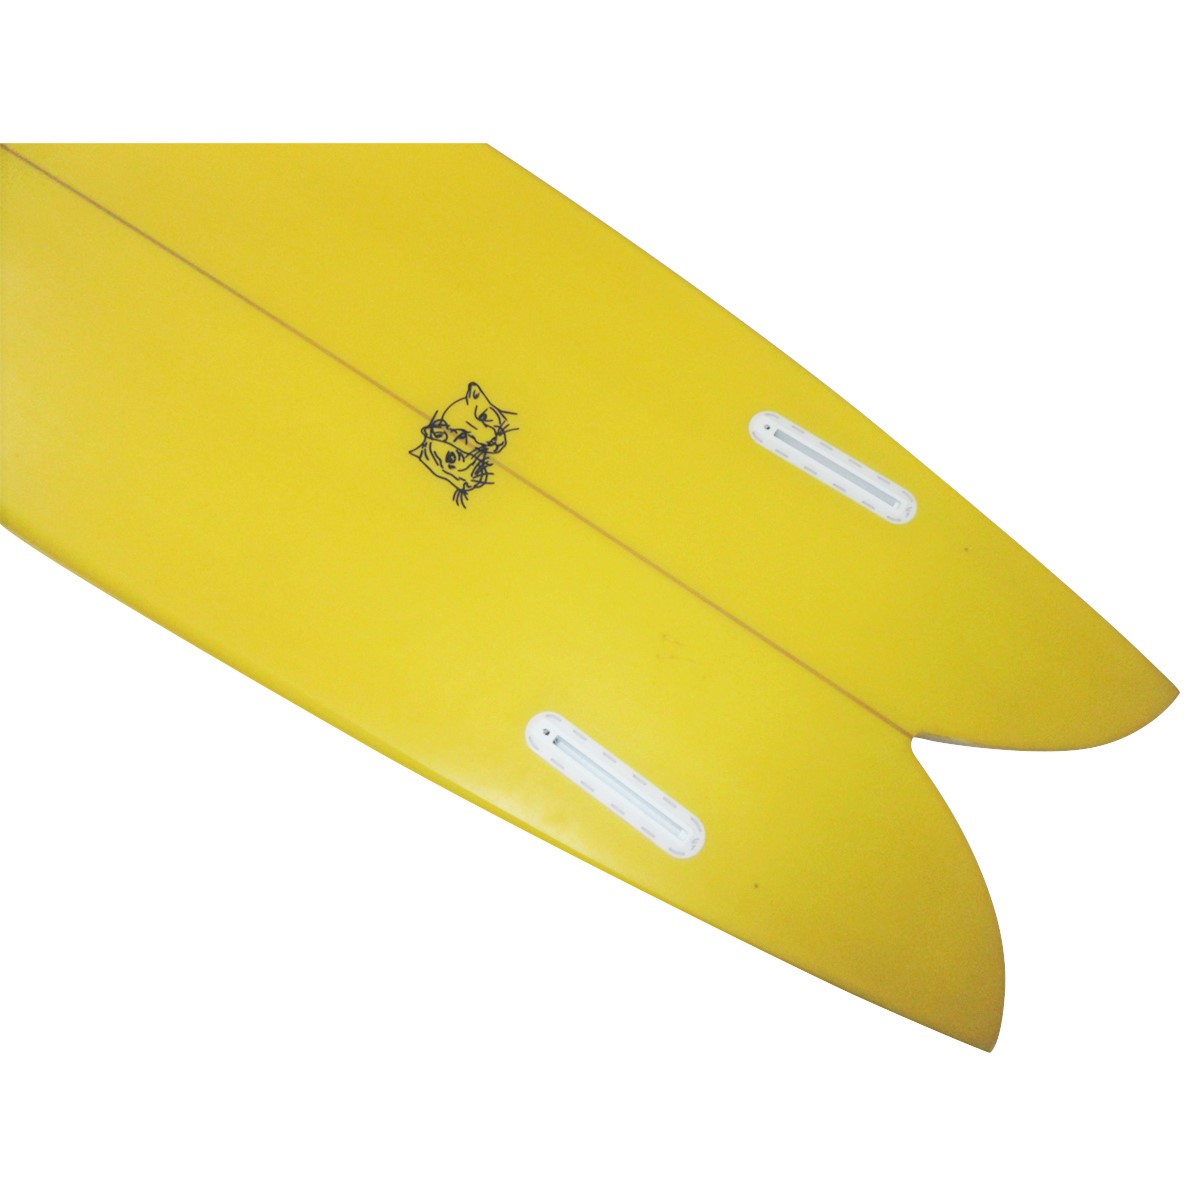 Dash Surfboards Siamese Twin fish